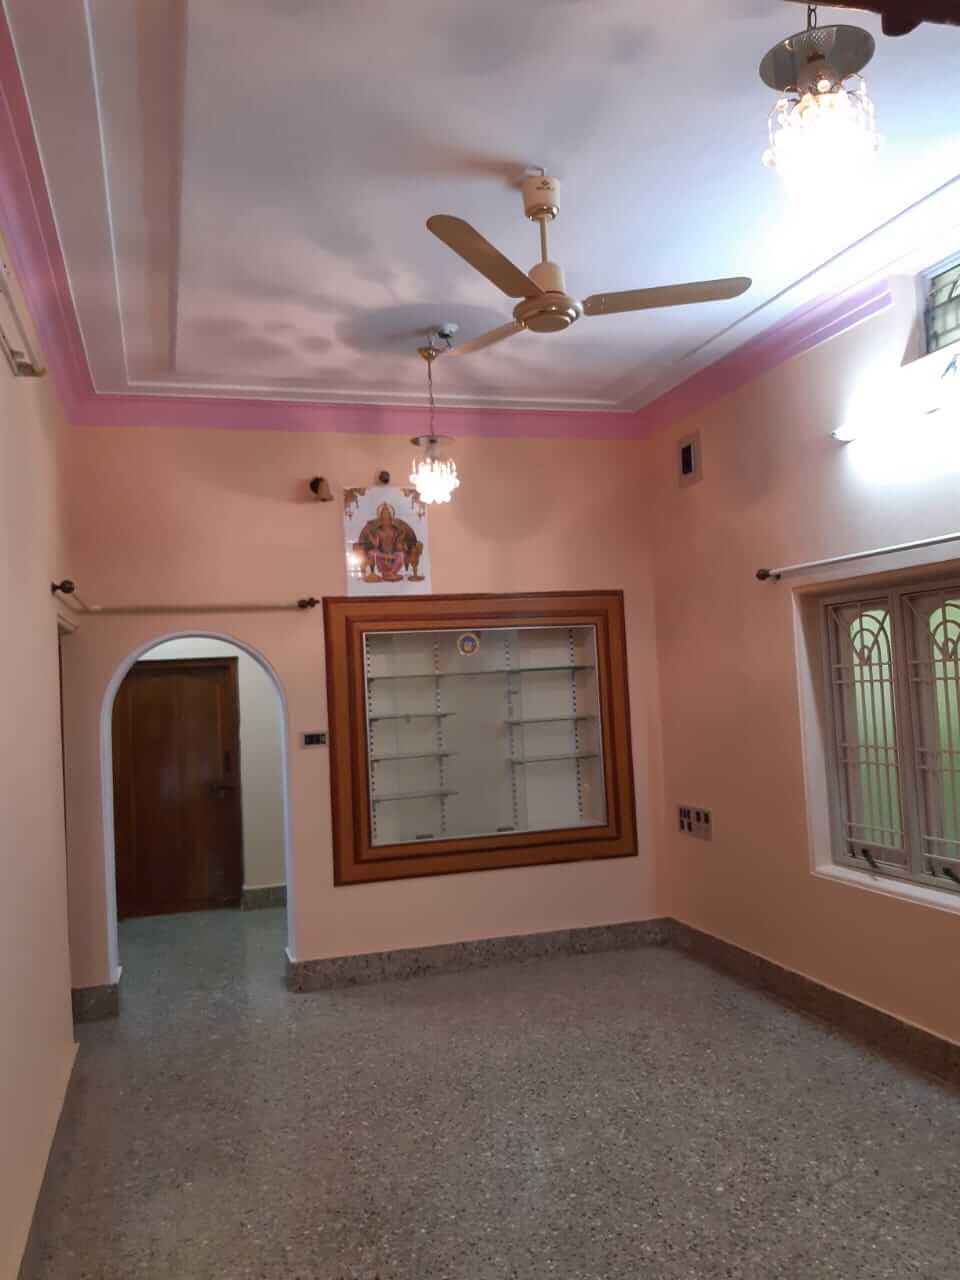 Independent House for Rent 1200 Sq. Feet at Mysore
, Vijay Nagar